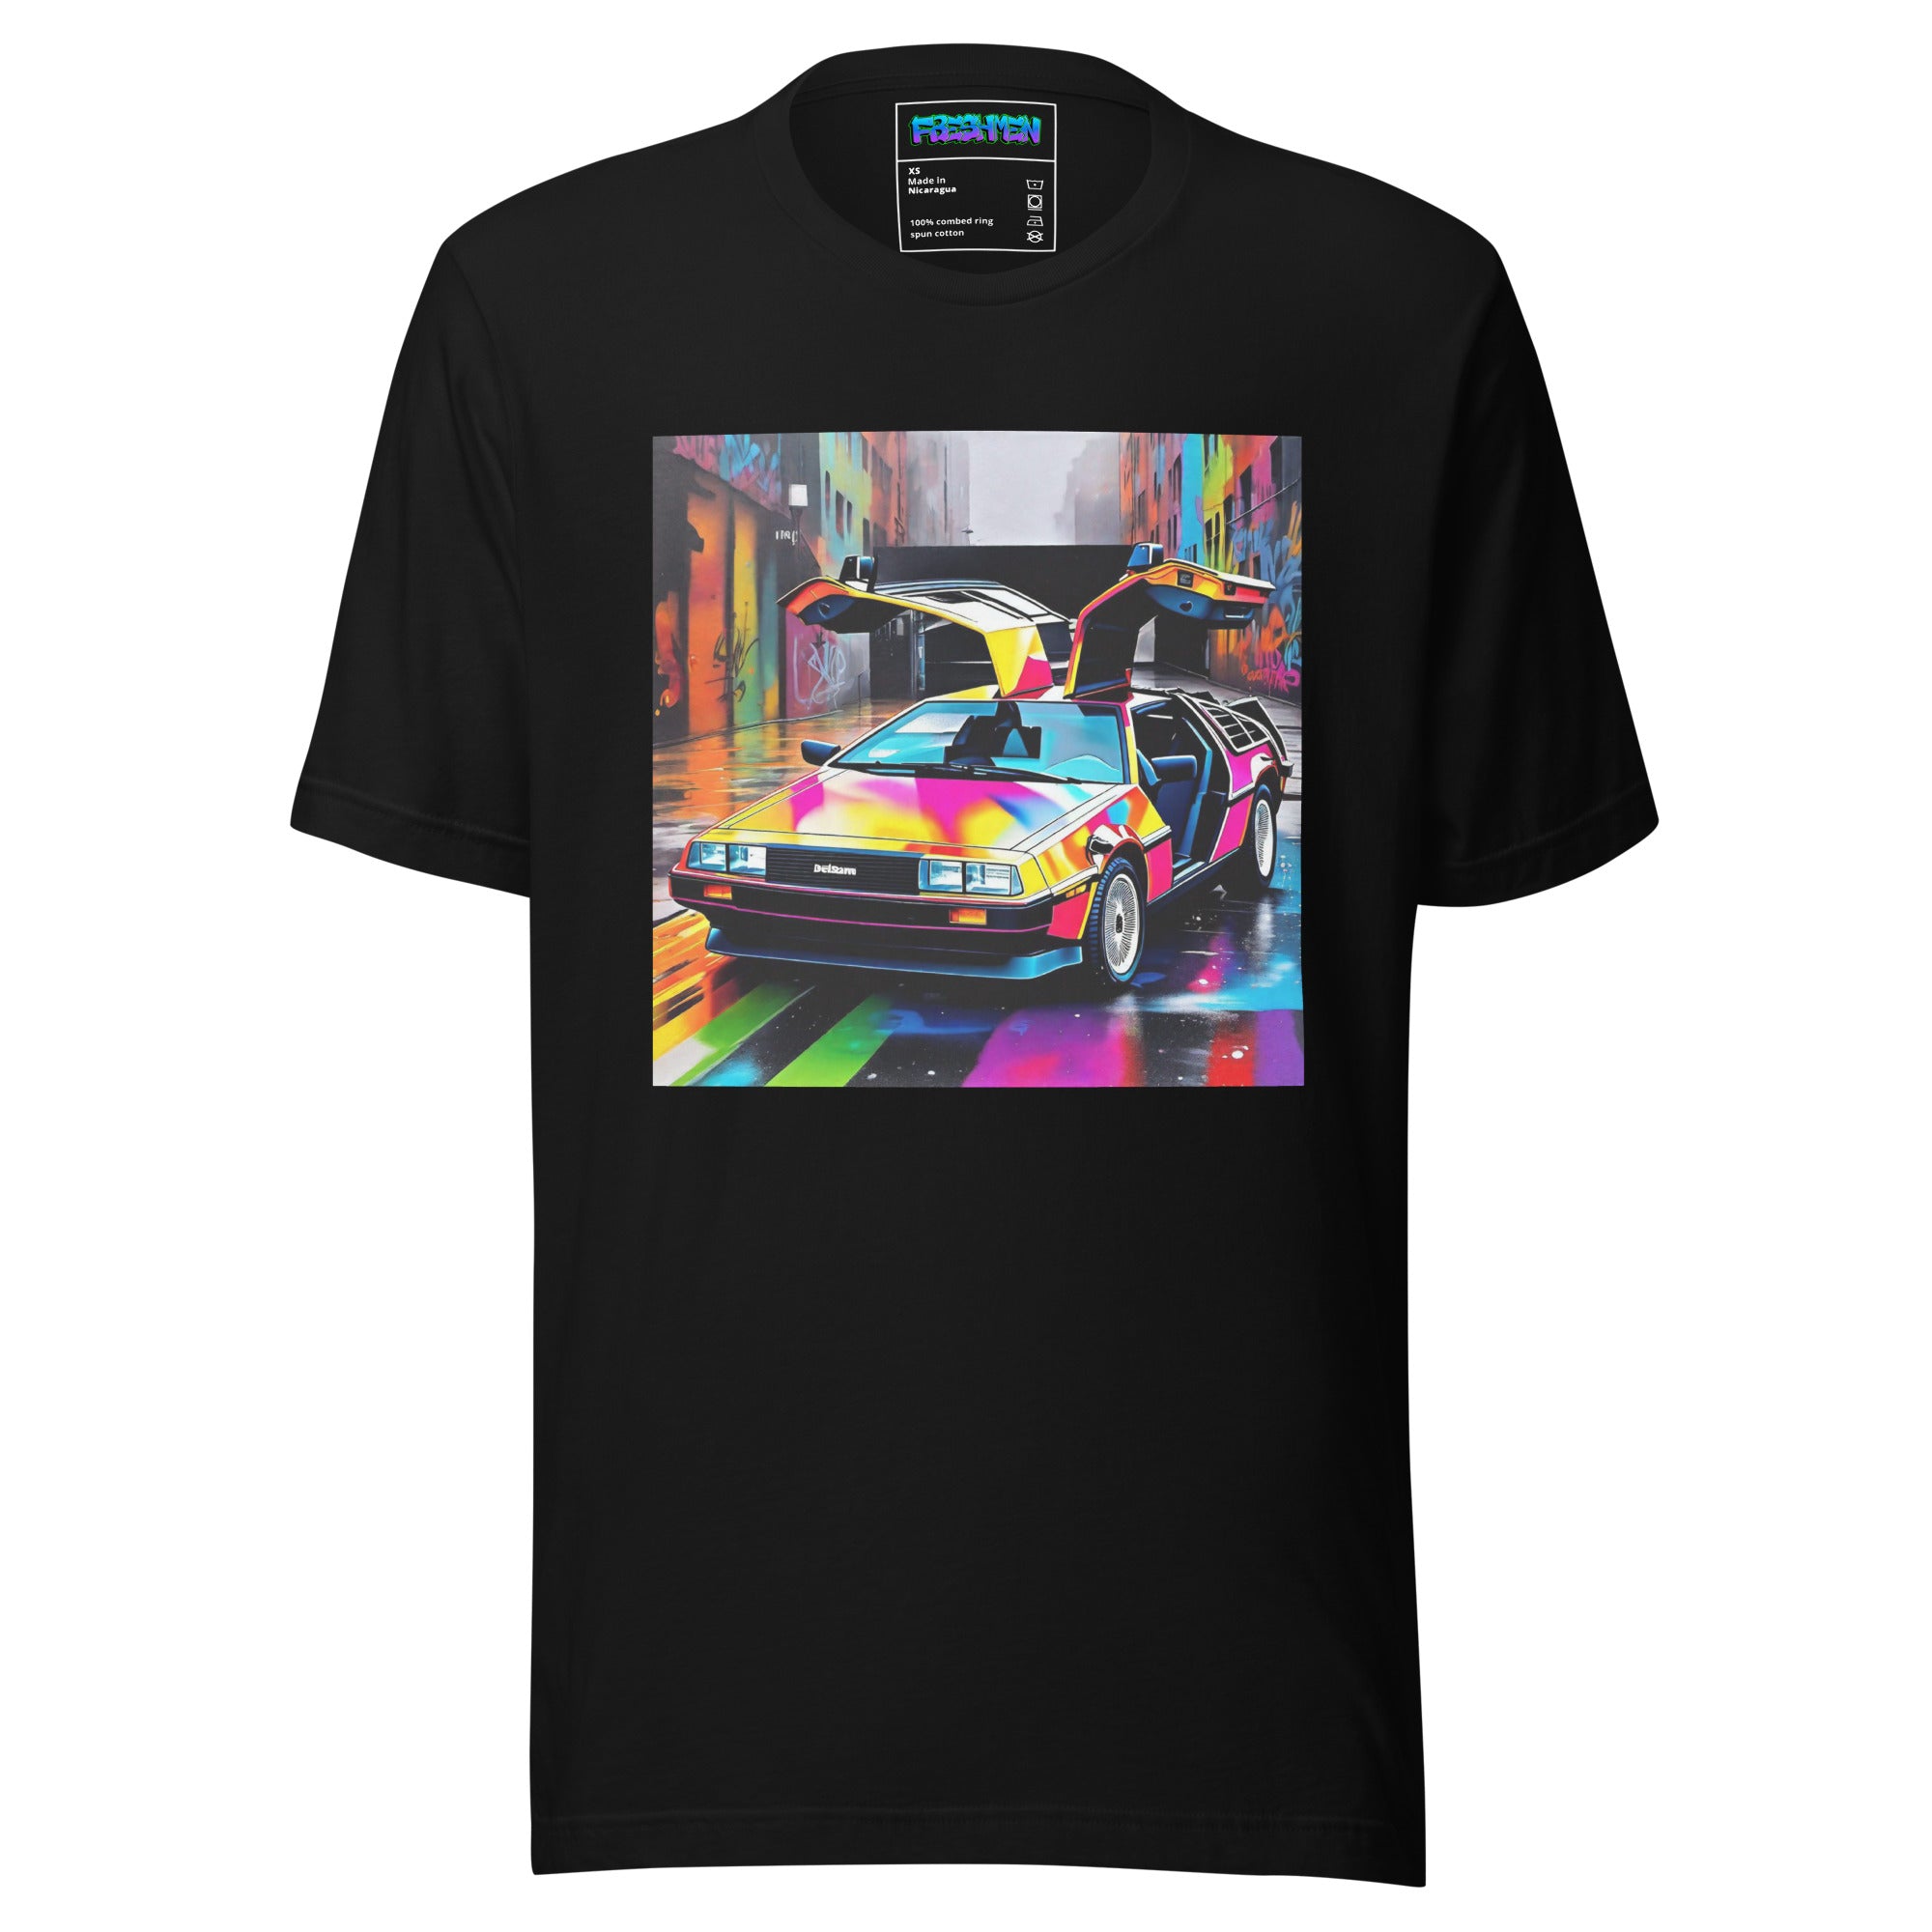 Freshmen DeLorean Graffiti Style Unisex Graphic T-Shirt